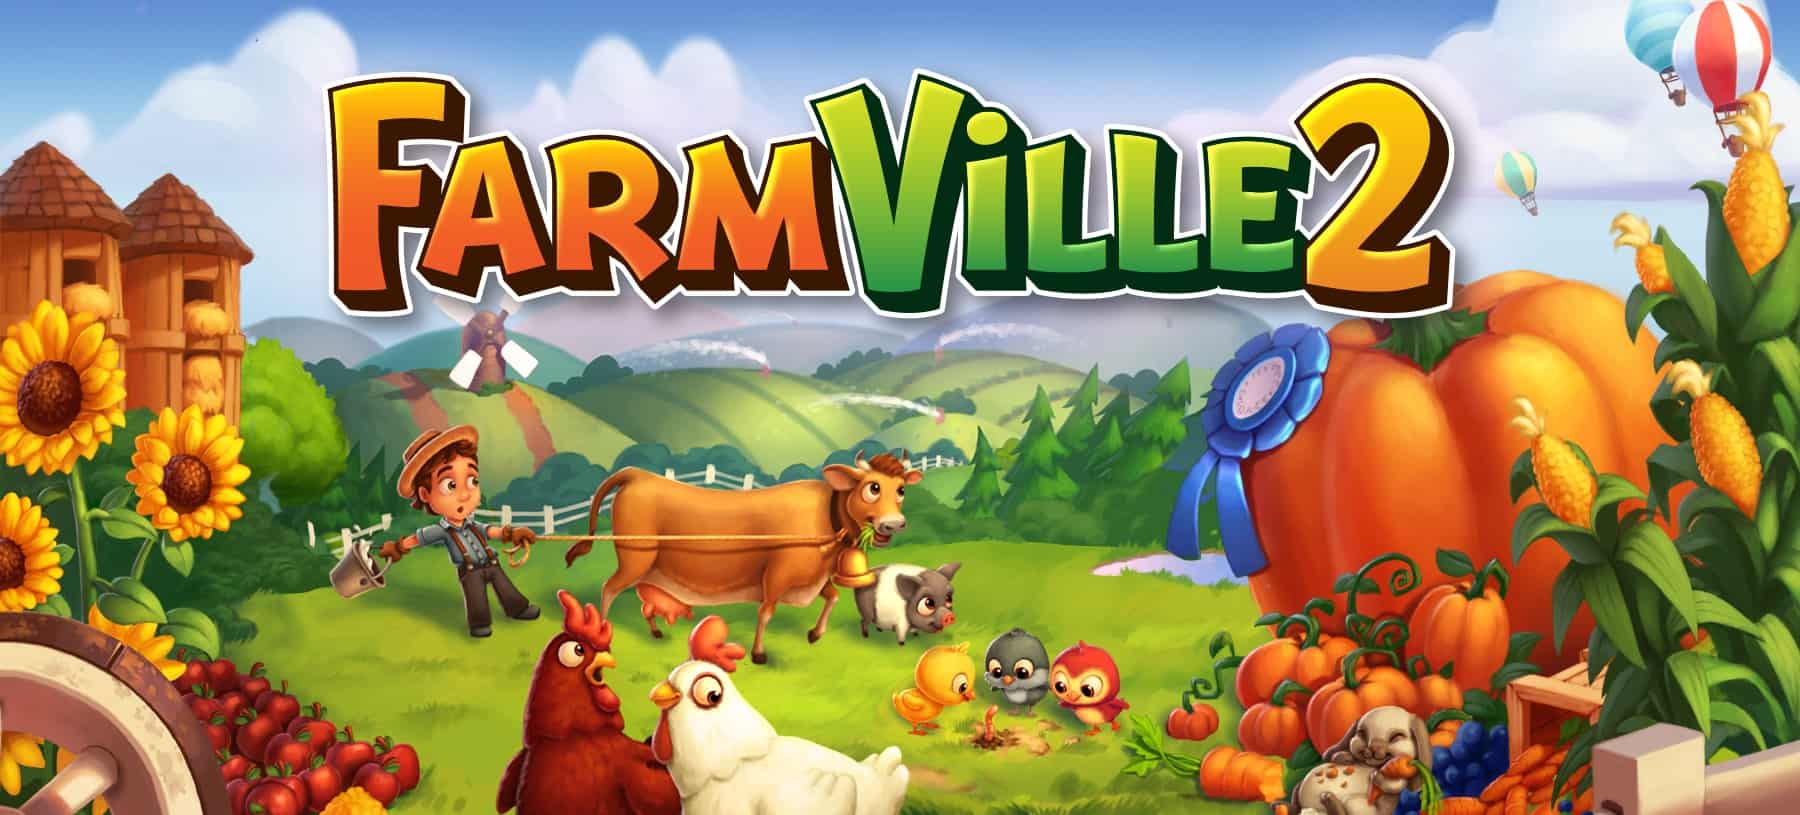 Видео farmville 2 android